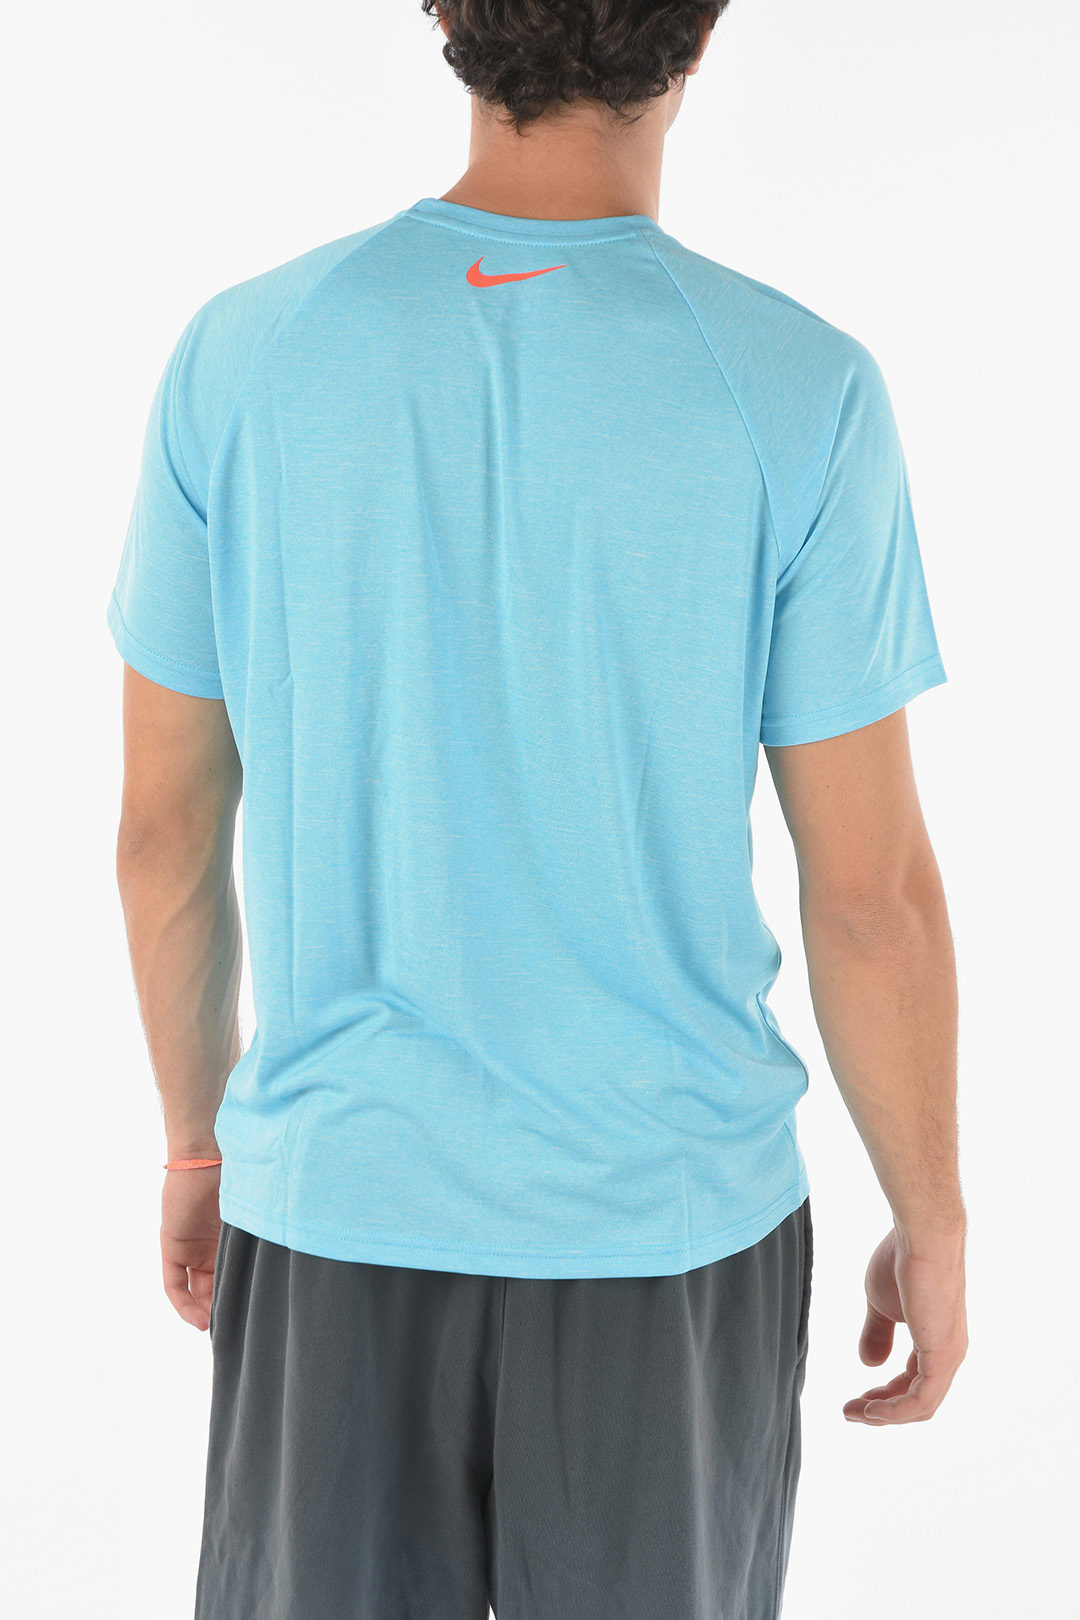 Nike SWIM Logo Printed Dri-Fit T-shirt men - Glamood Outlet